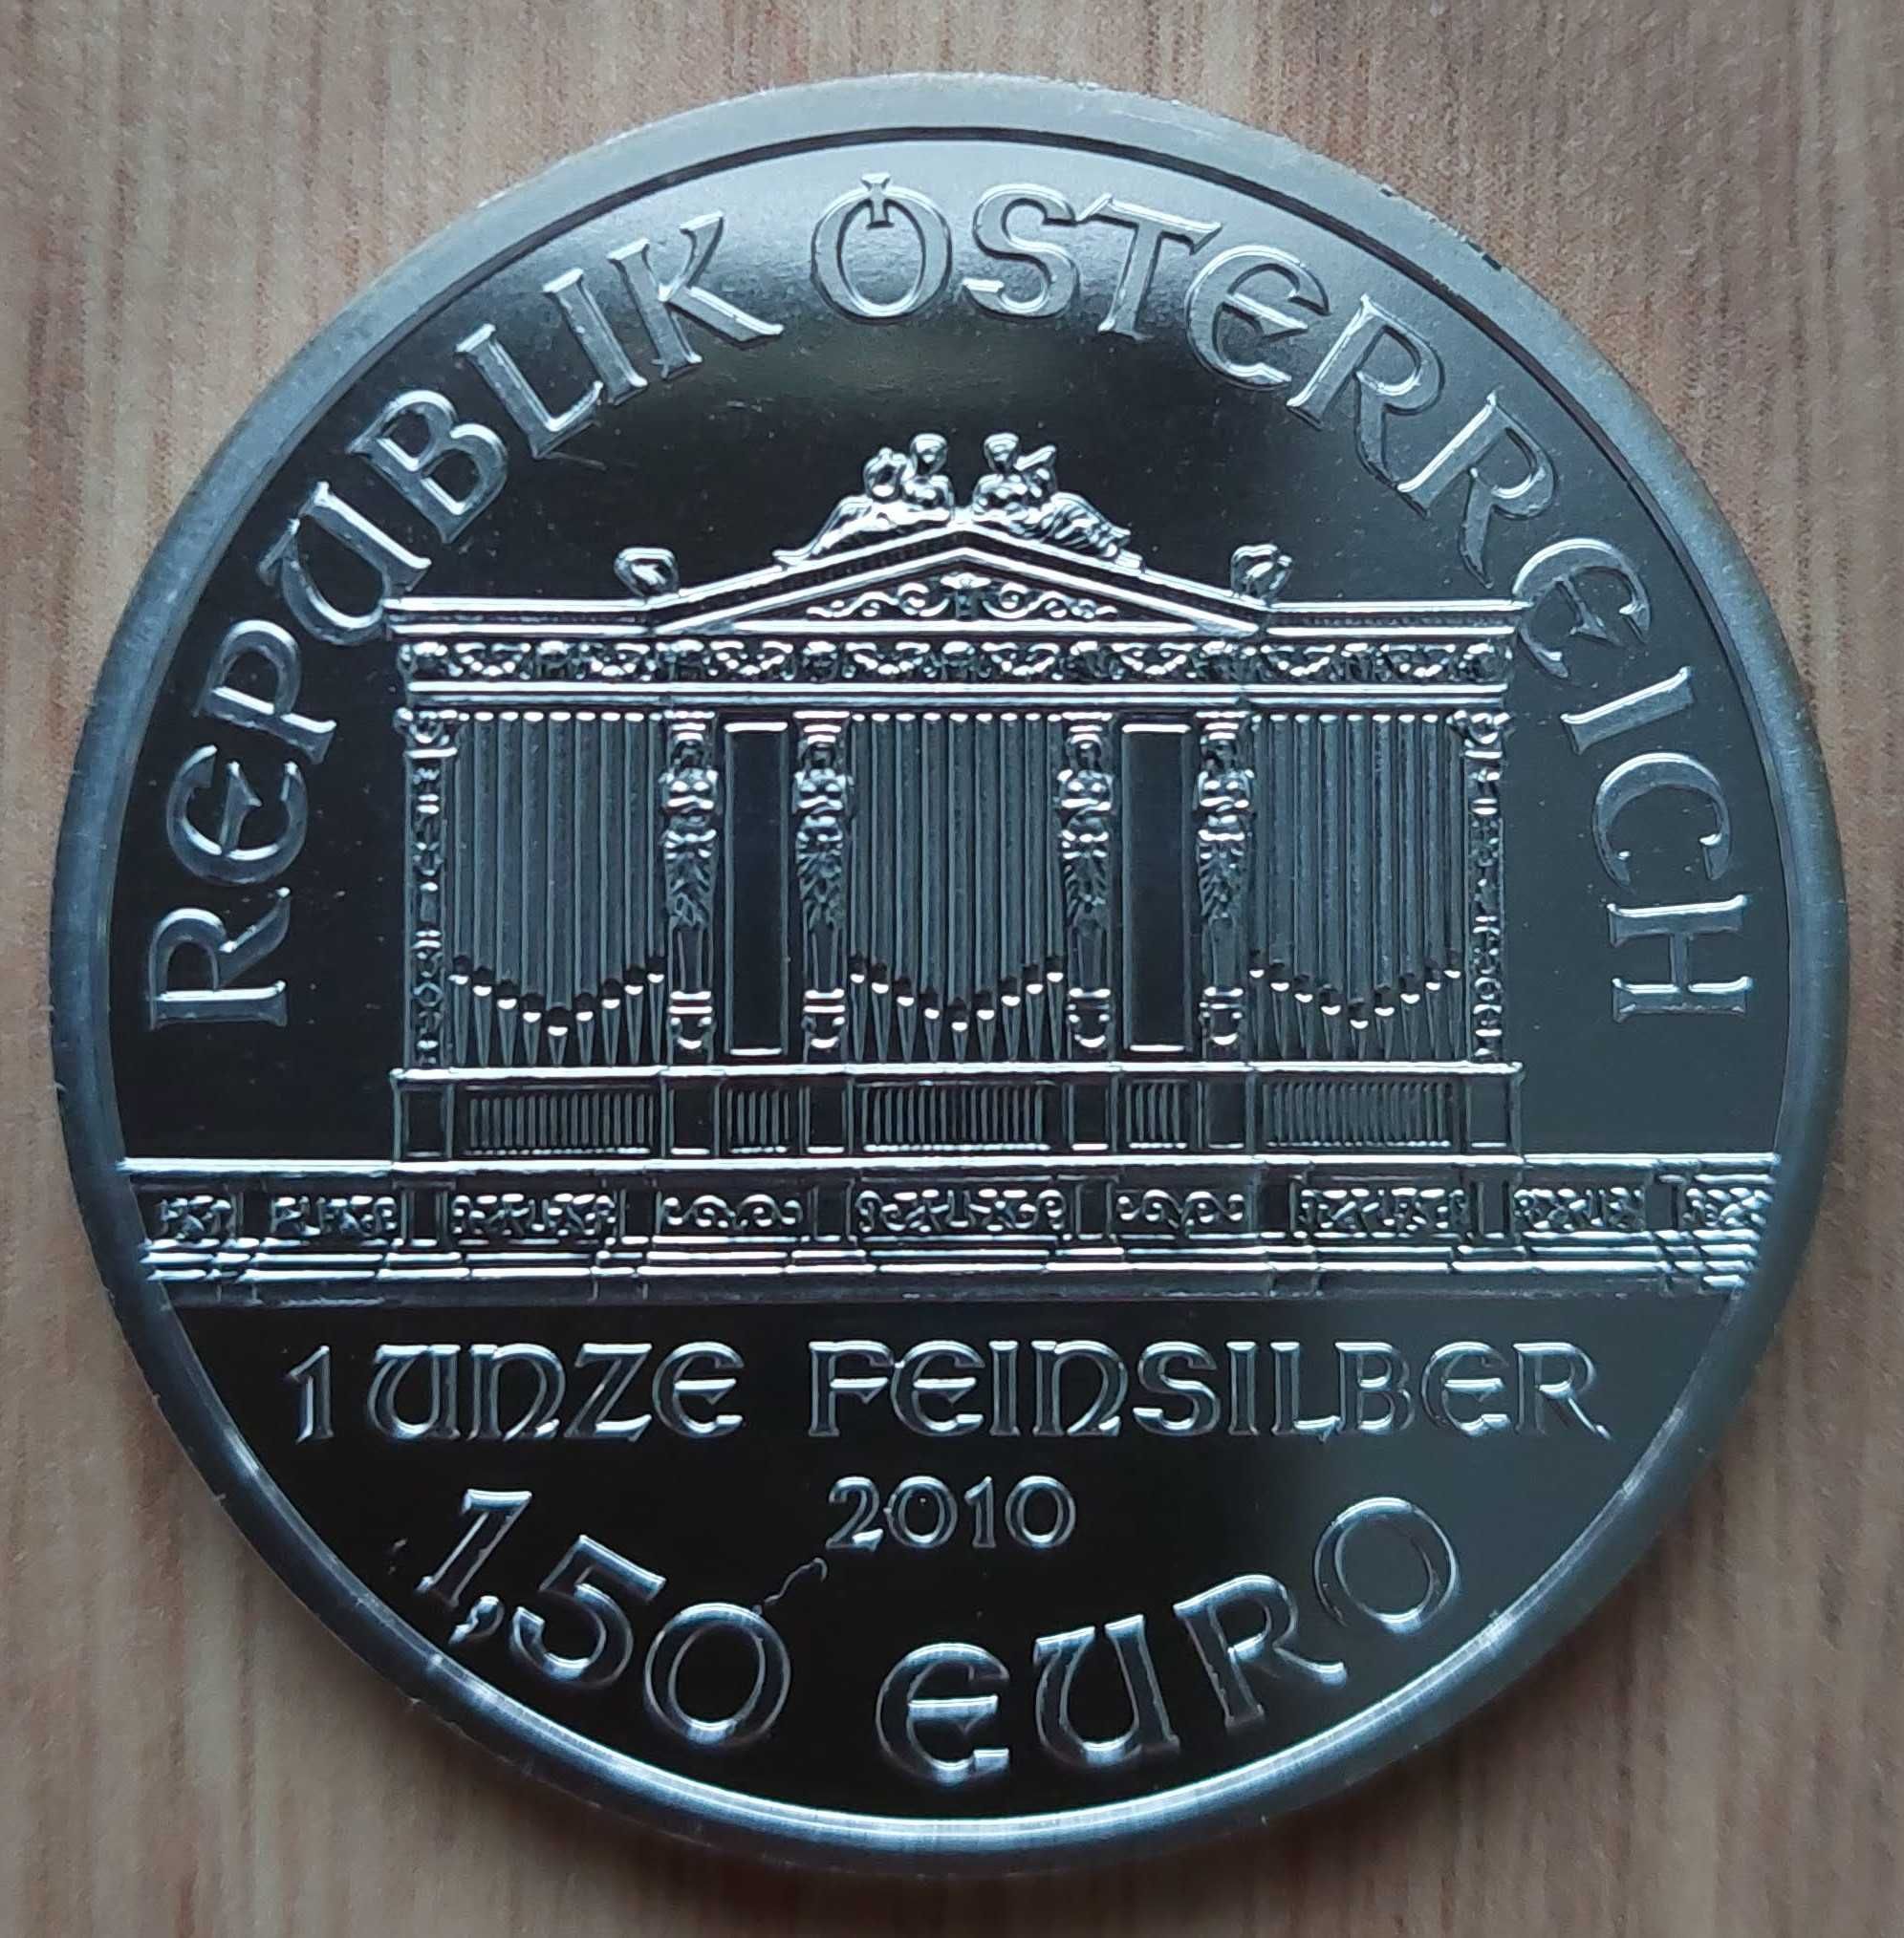 Monede argint "Wiener Philharmoniker" 2010, Austria, 1 uncie, 31.1 g